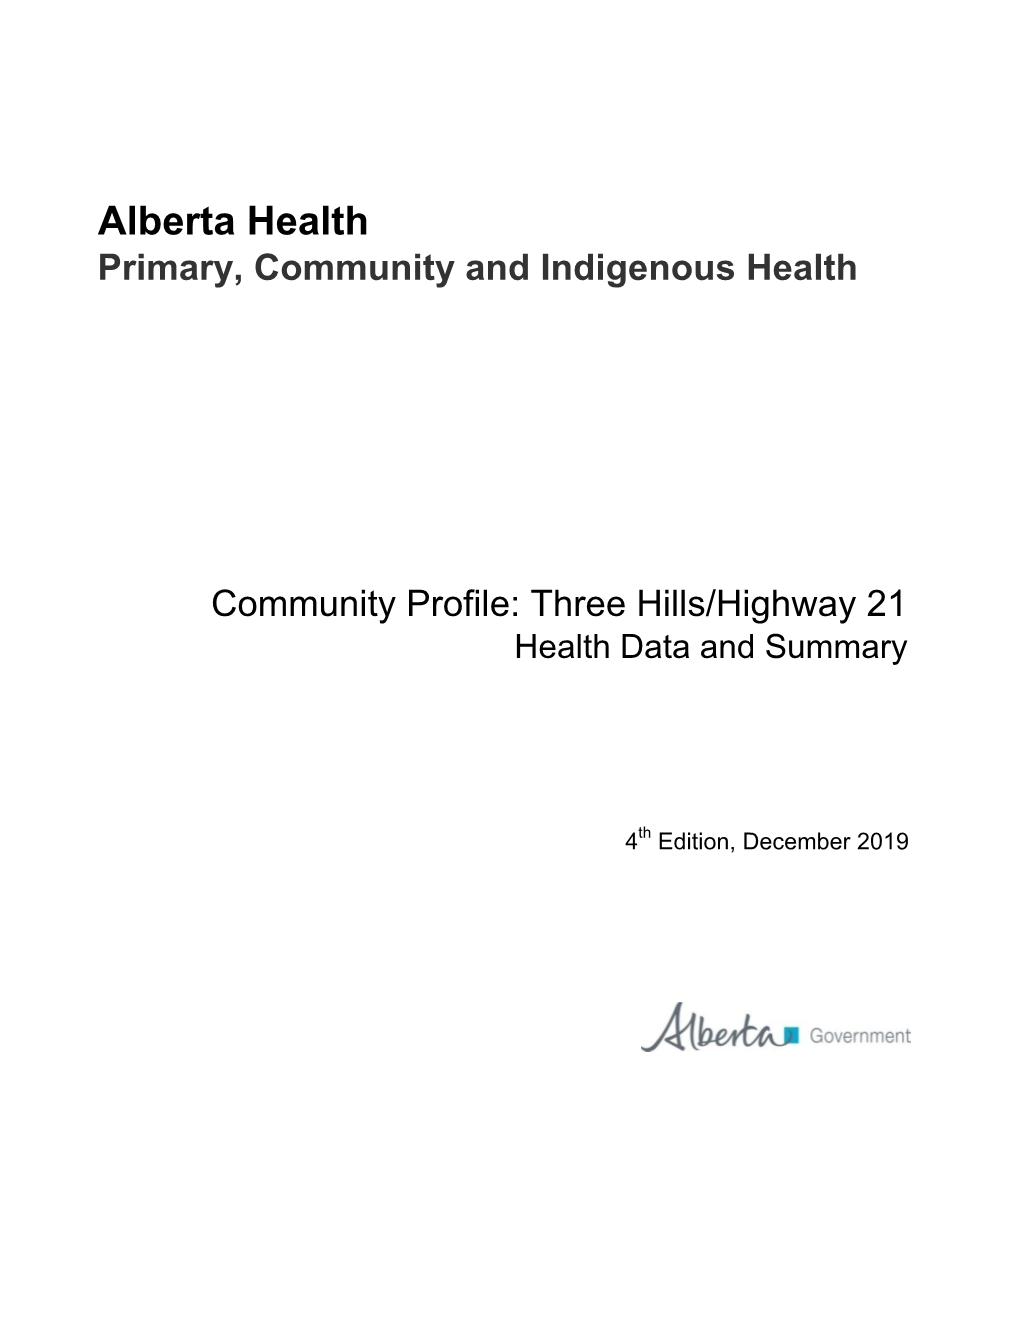 Palberta Health Primary, Community and Indigenous Health, Community Profile: Three Hills